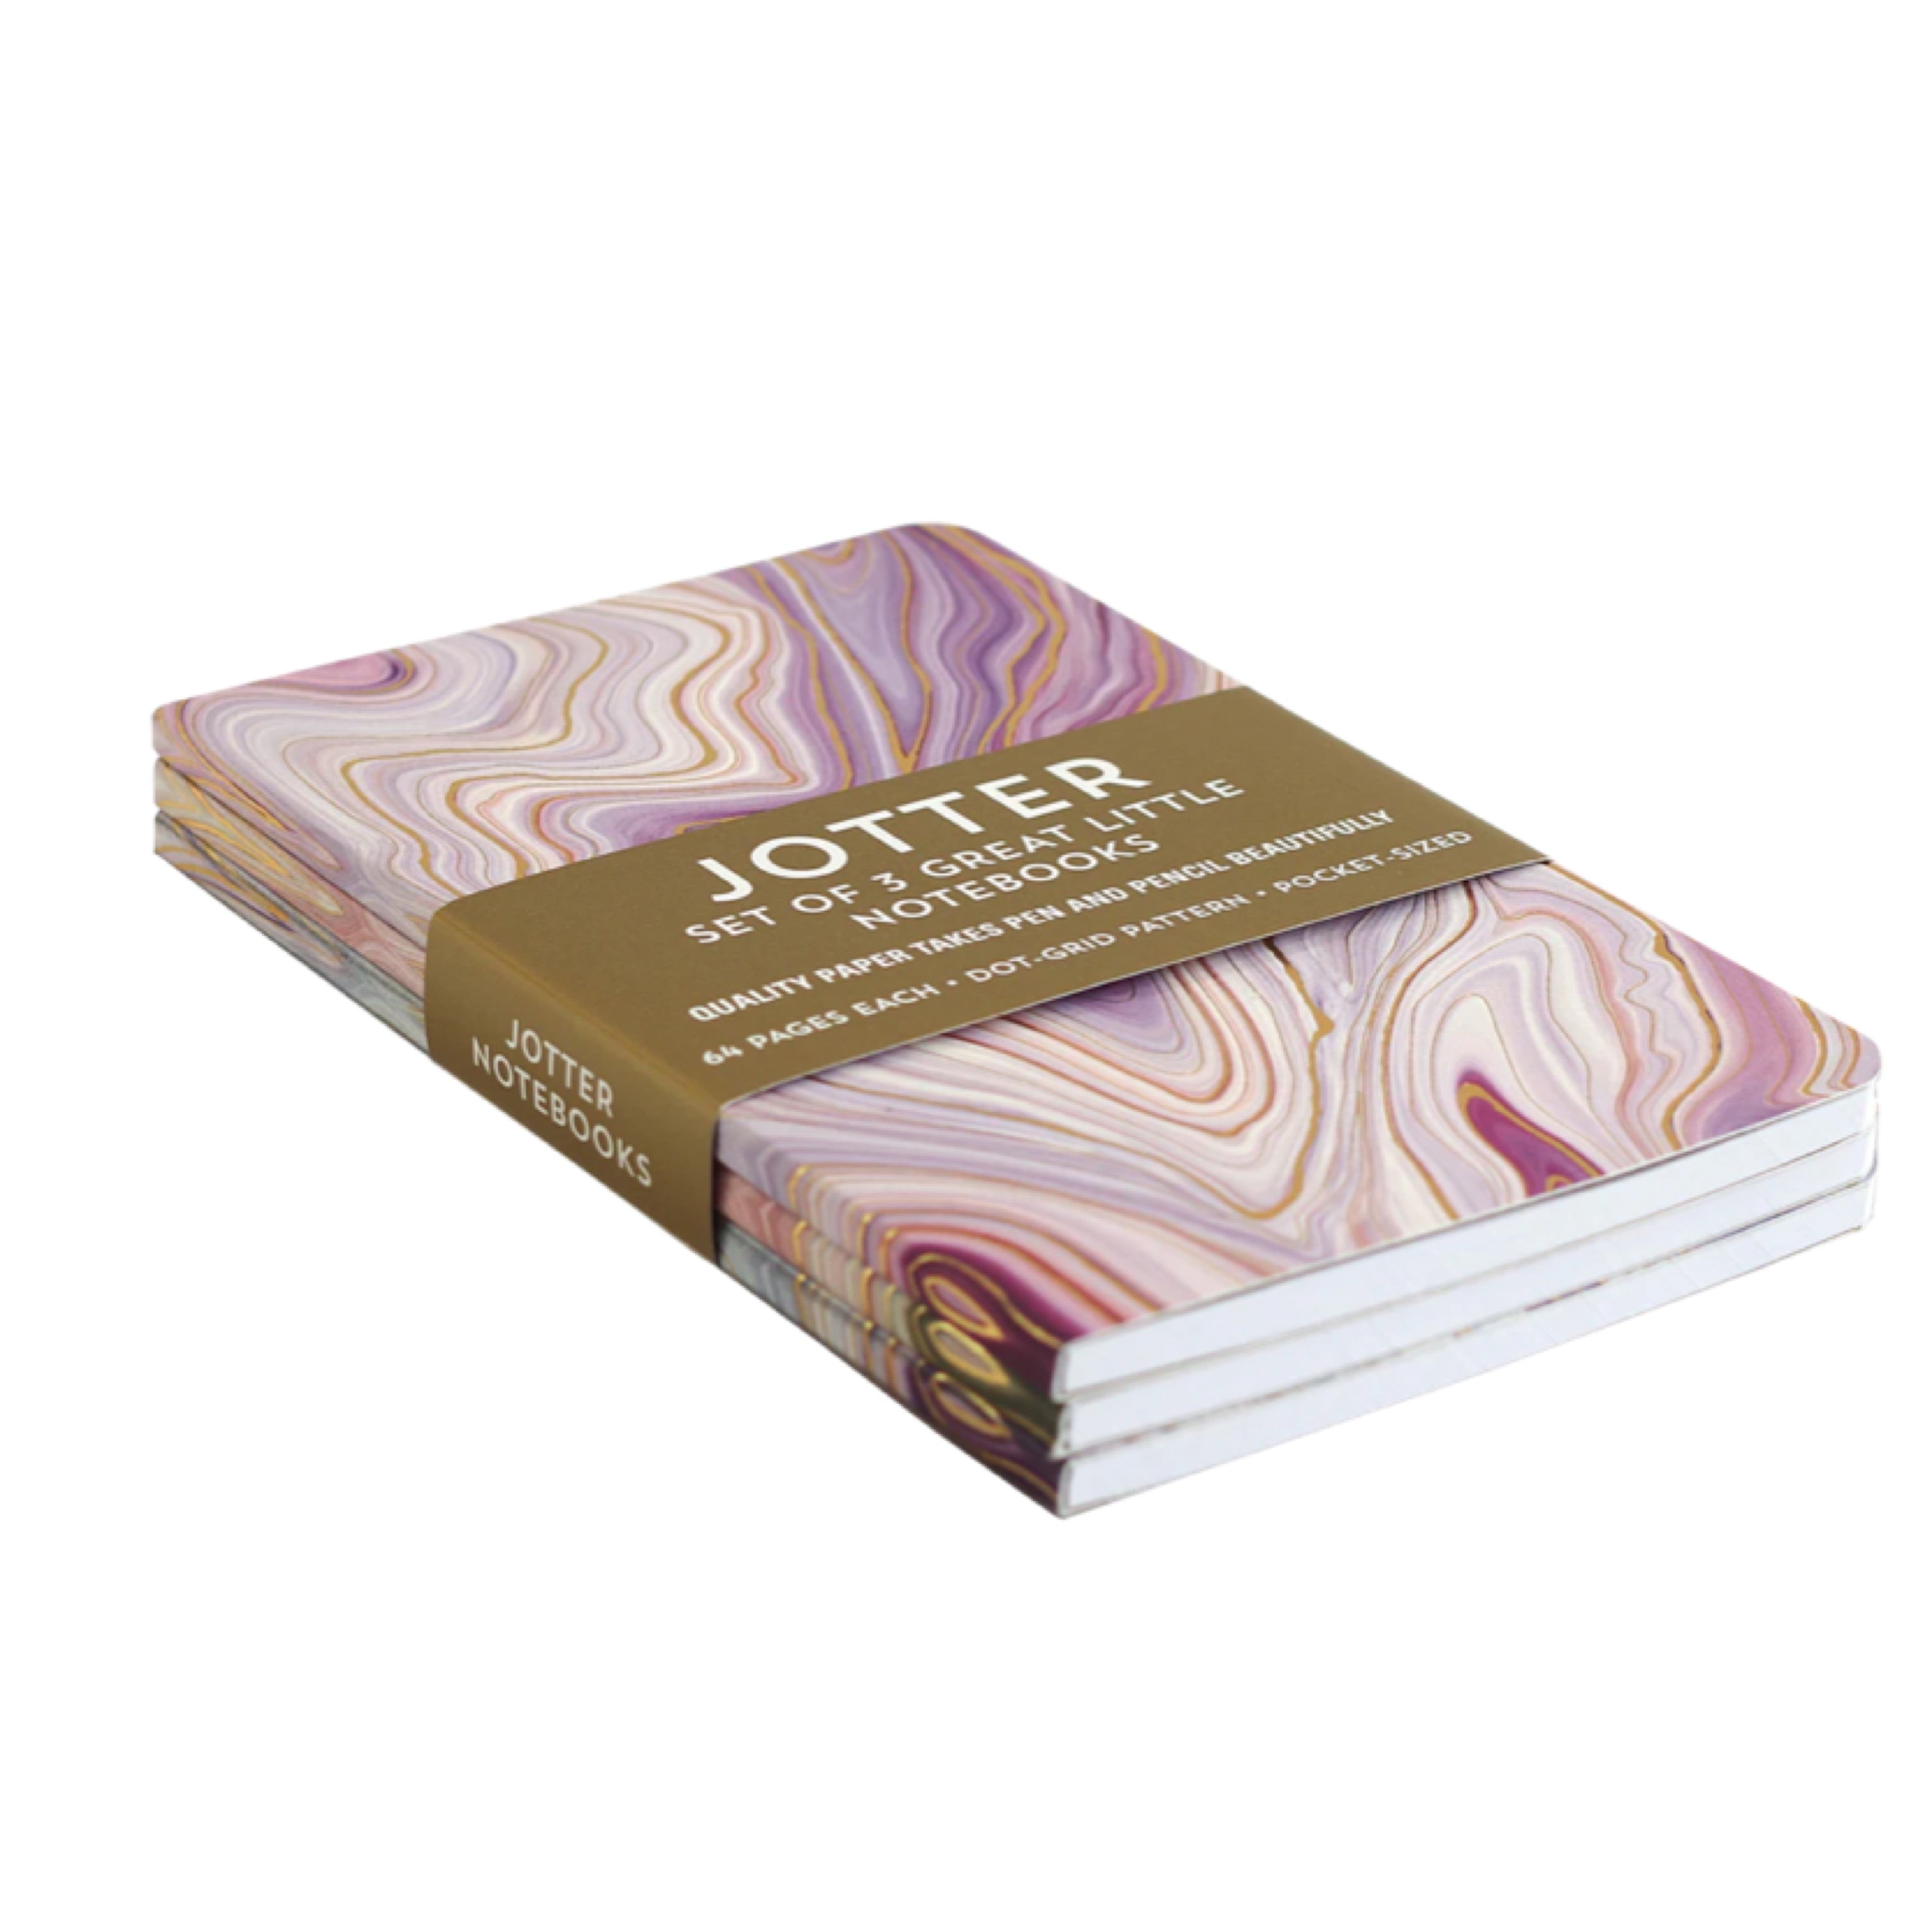 Notebook Jotter Mini 3 Pack - Agate